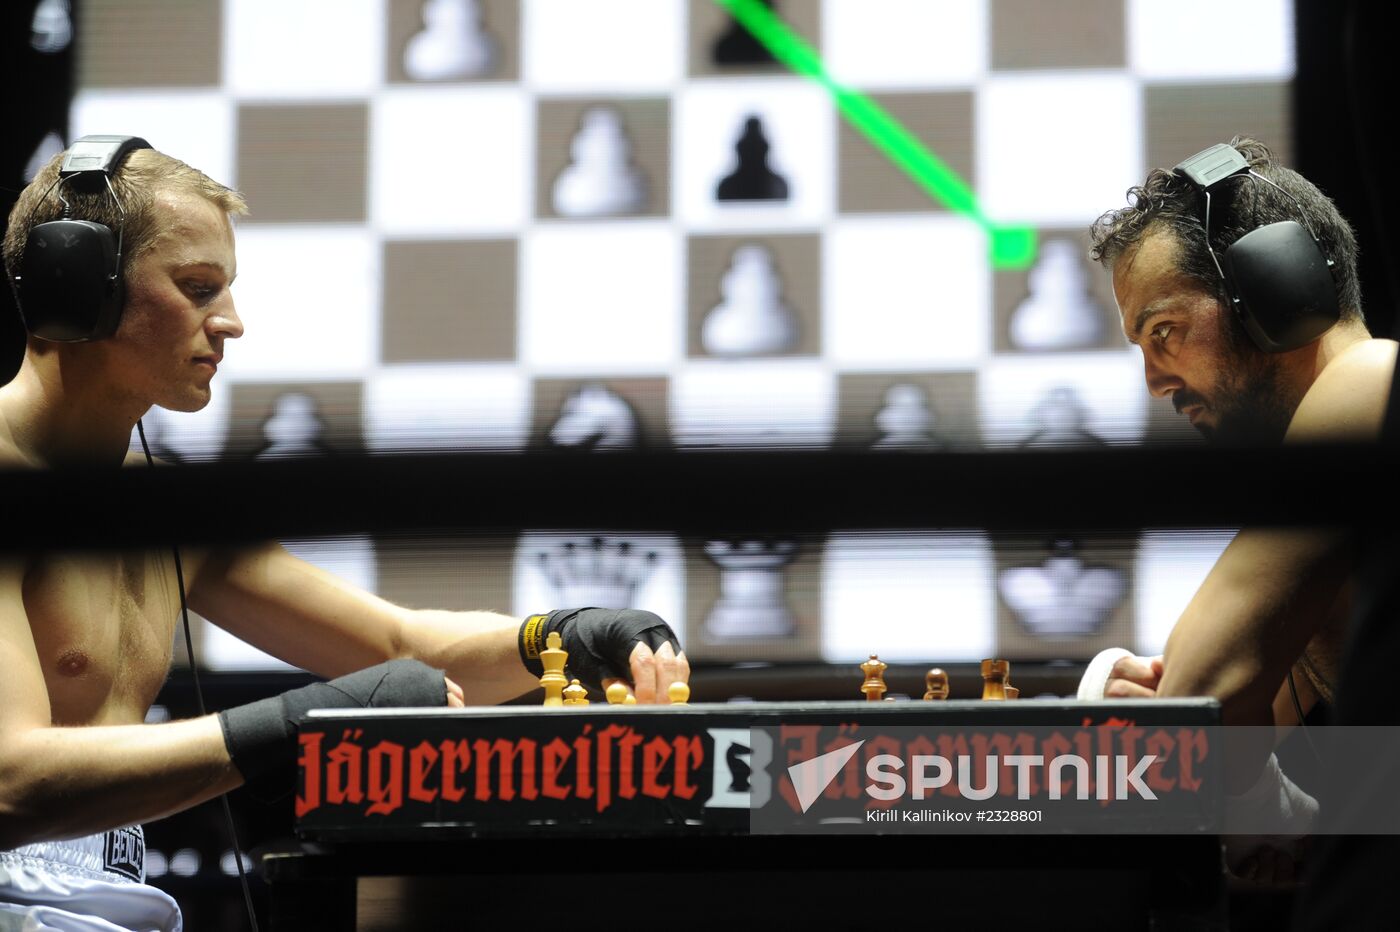 Chessboxing World Championship